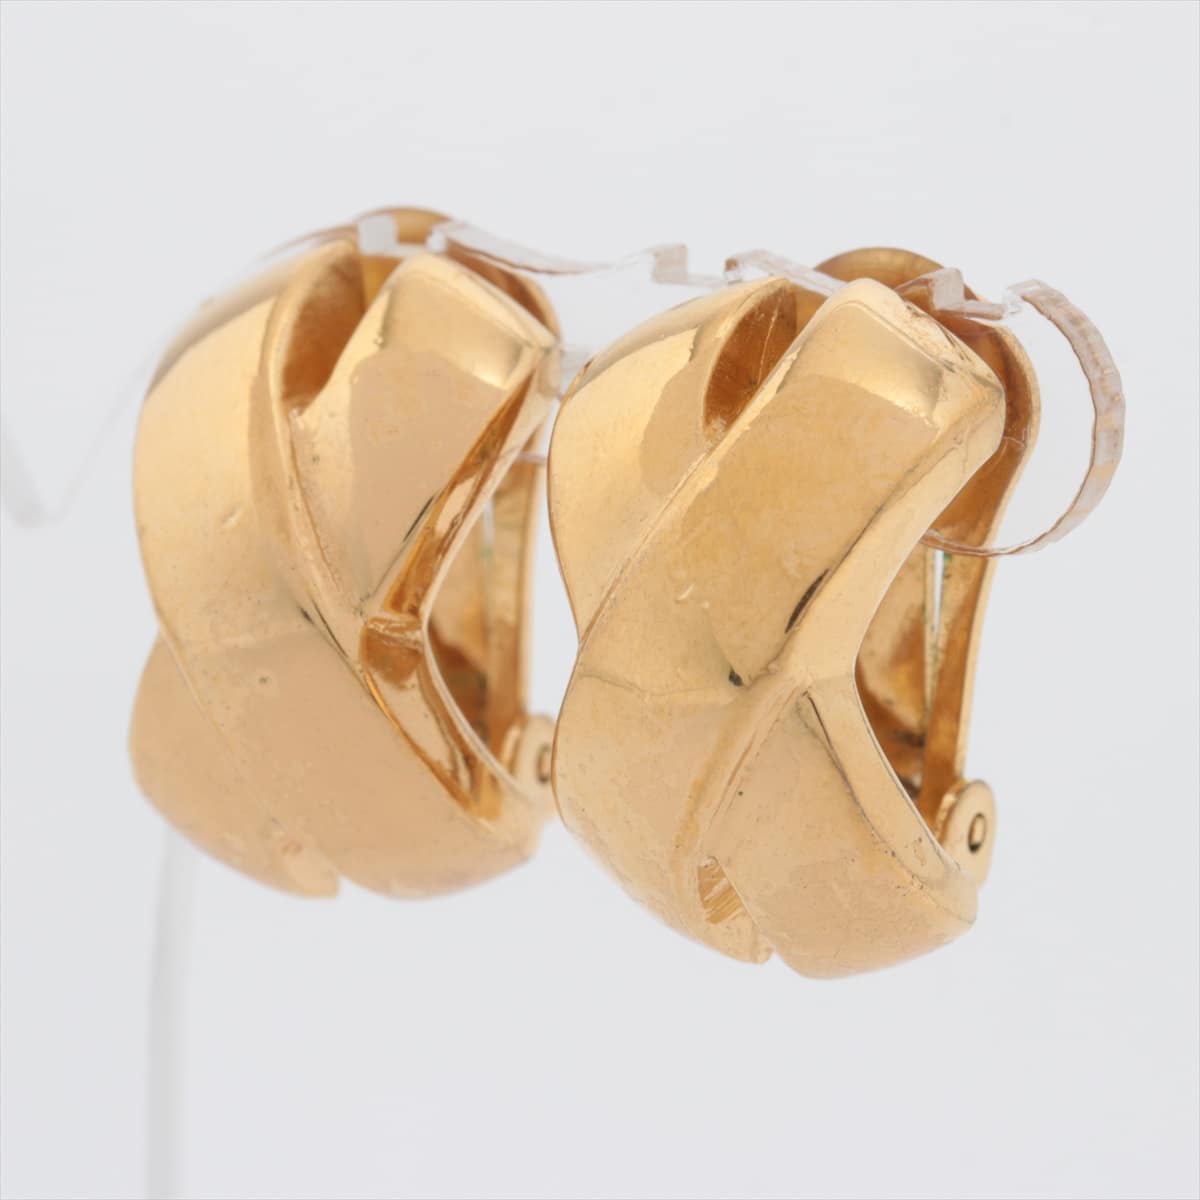 Christian Dior Earrings (for both ears) GP Gold